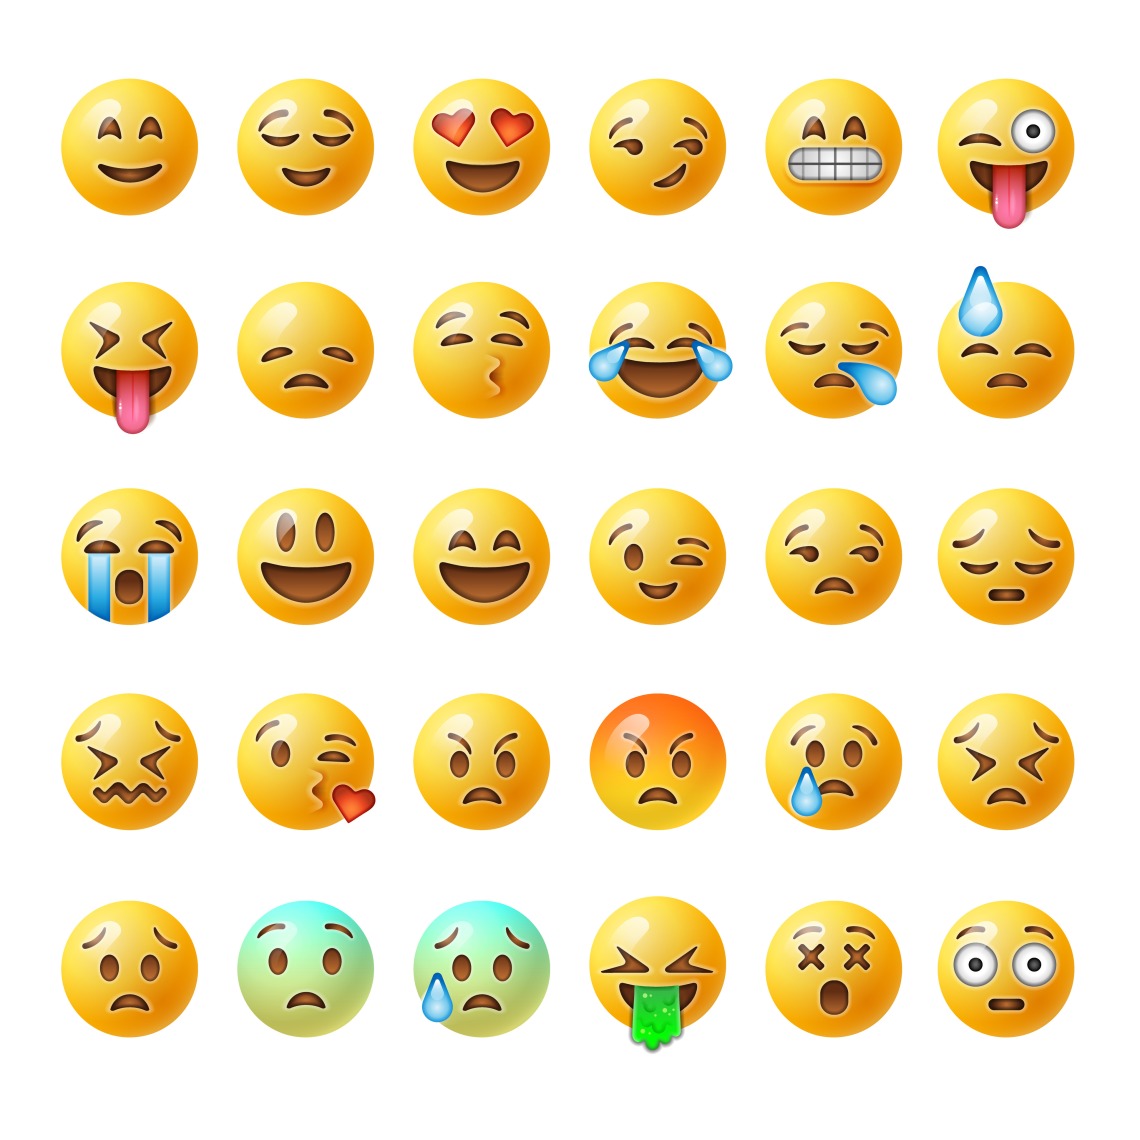 Box grid of different facial emojis